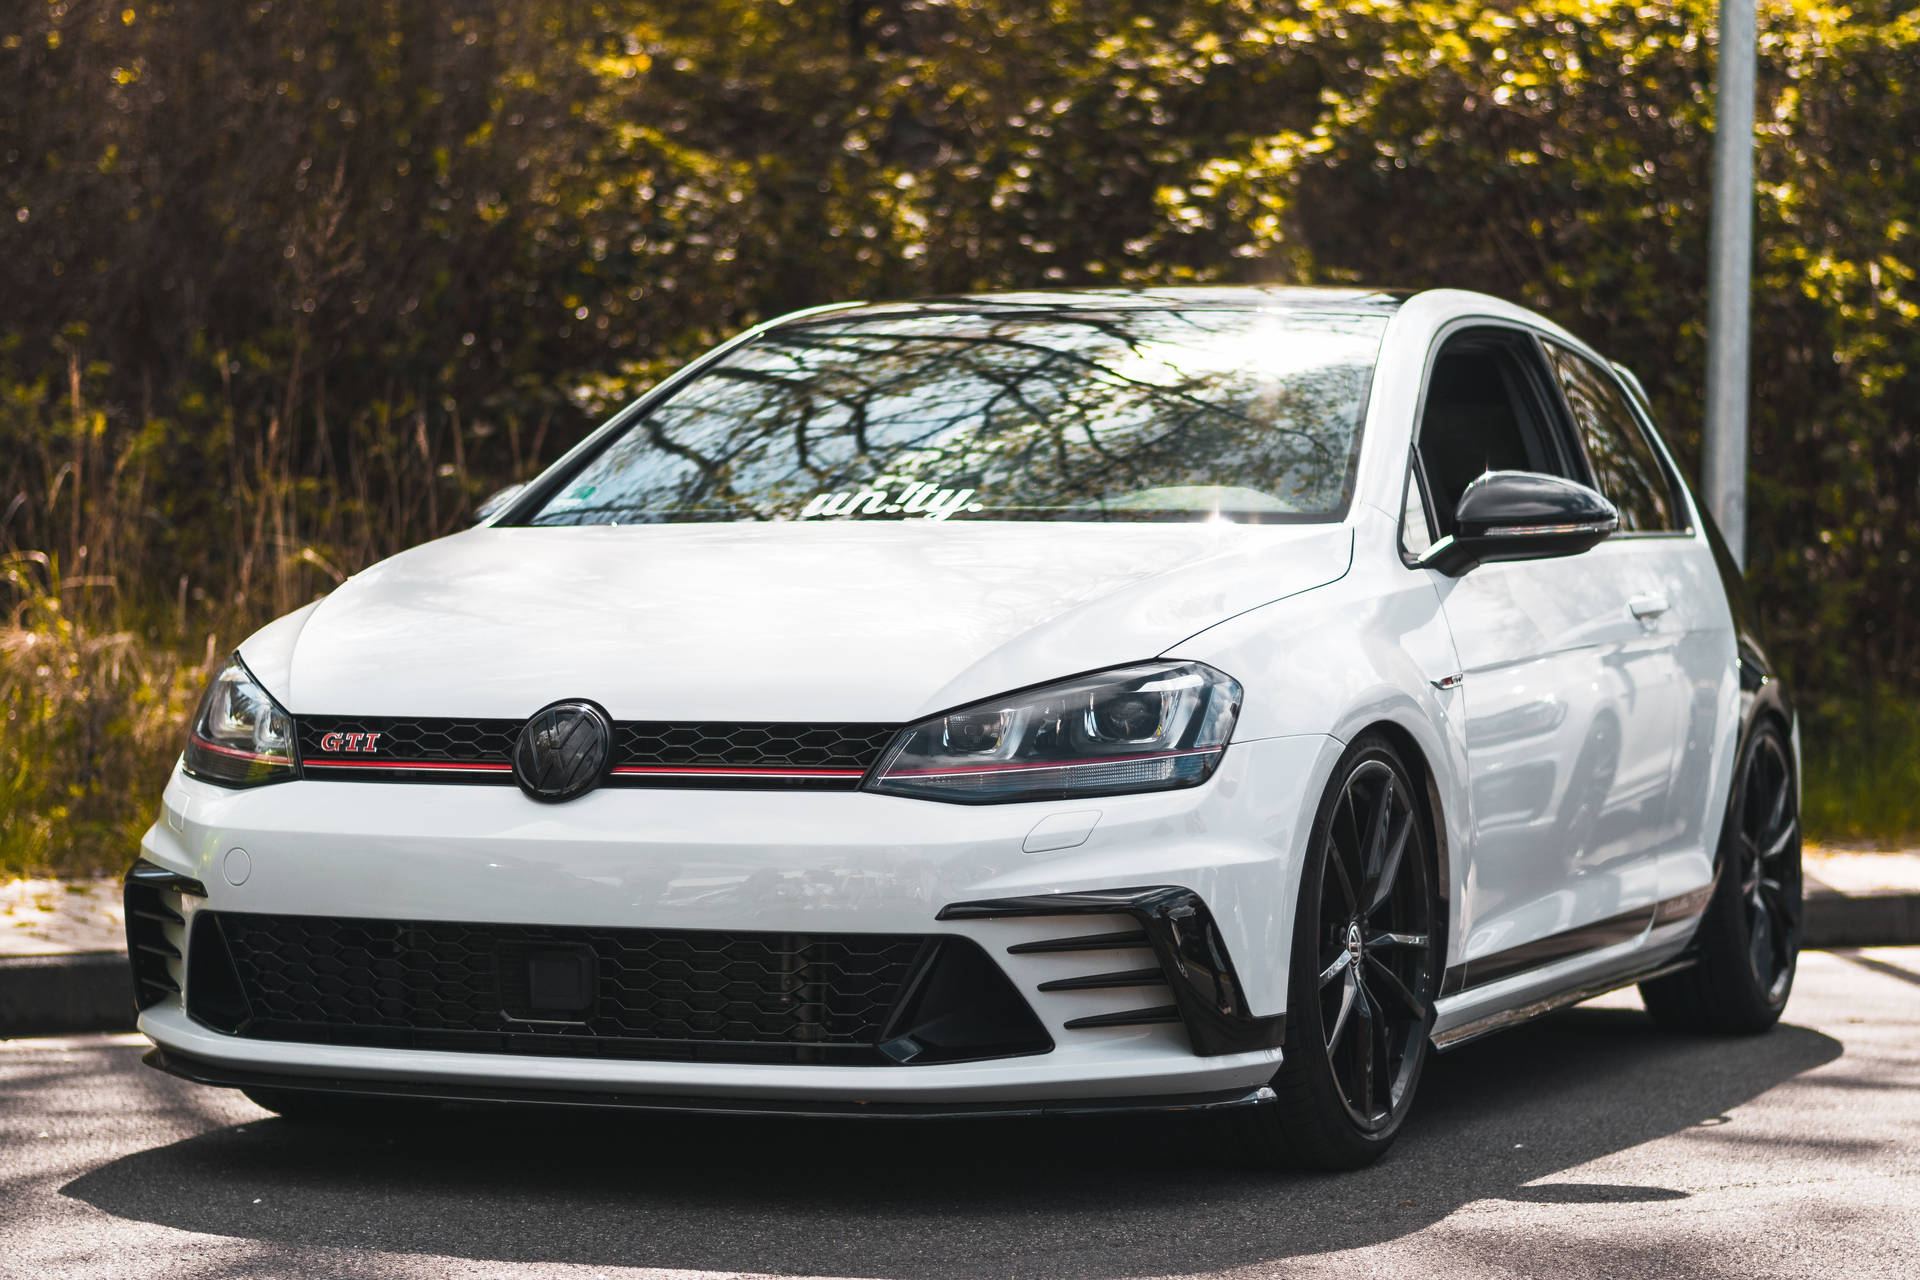 Enjoy the Ride in a Volkswagen Wallpaper